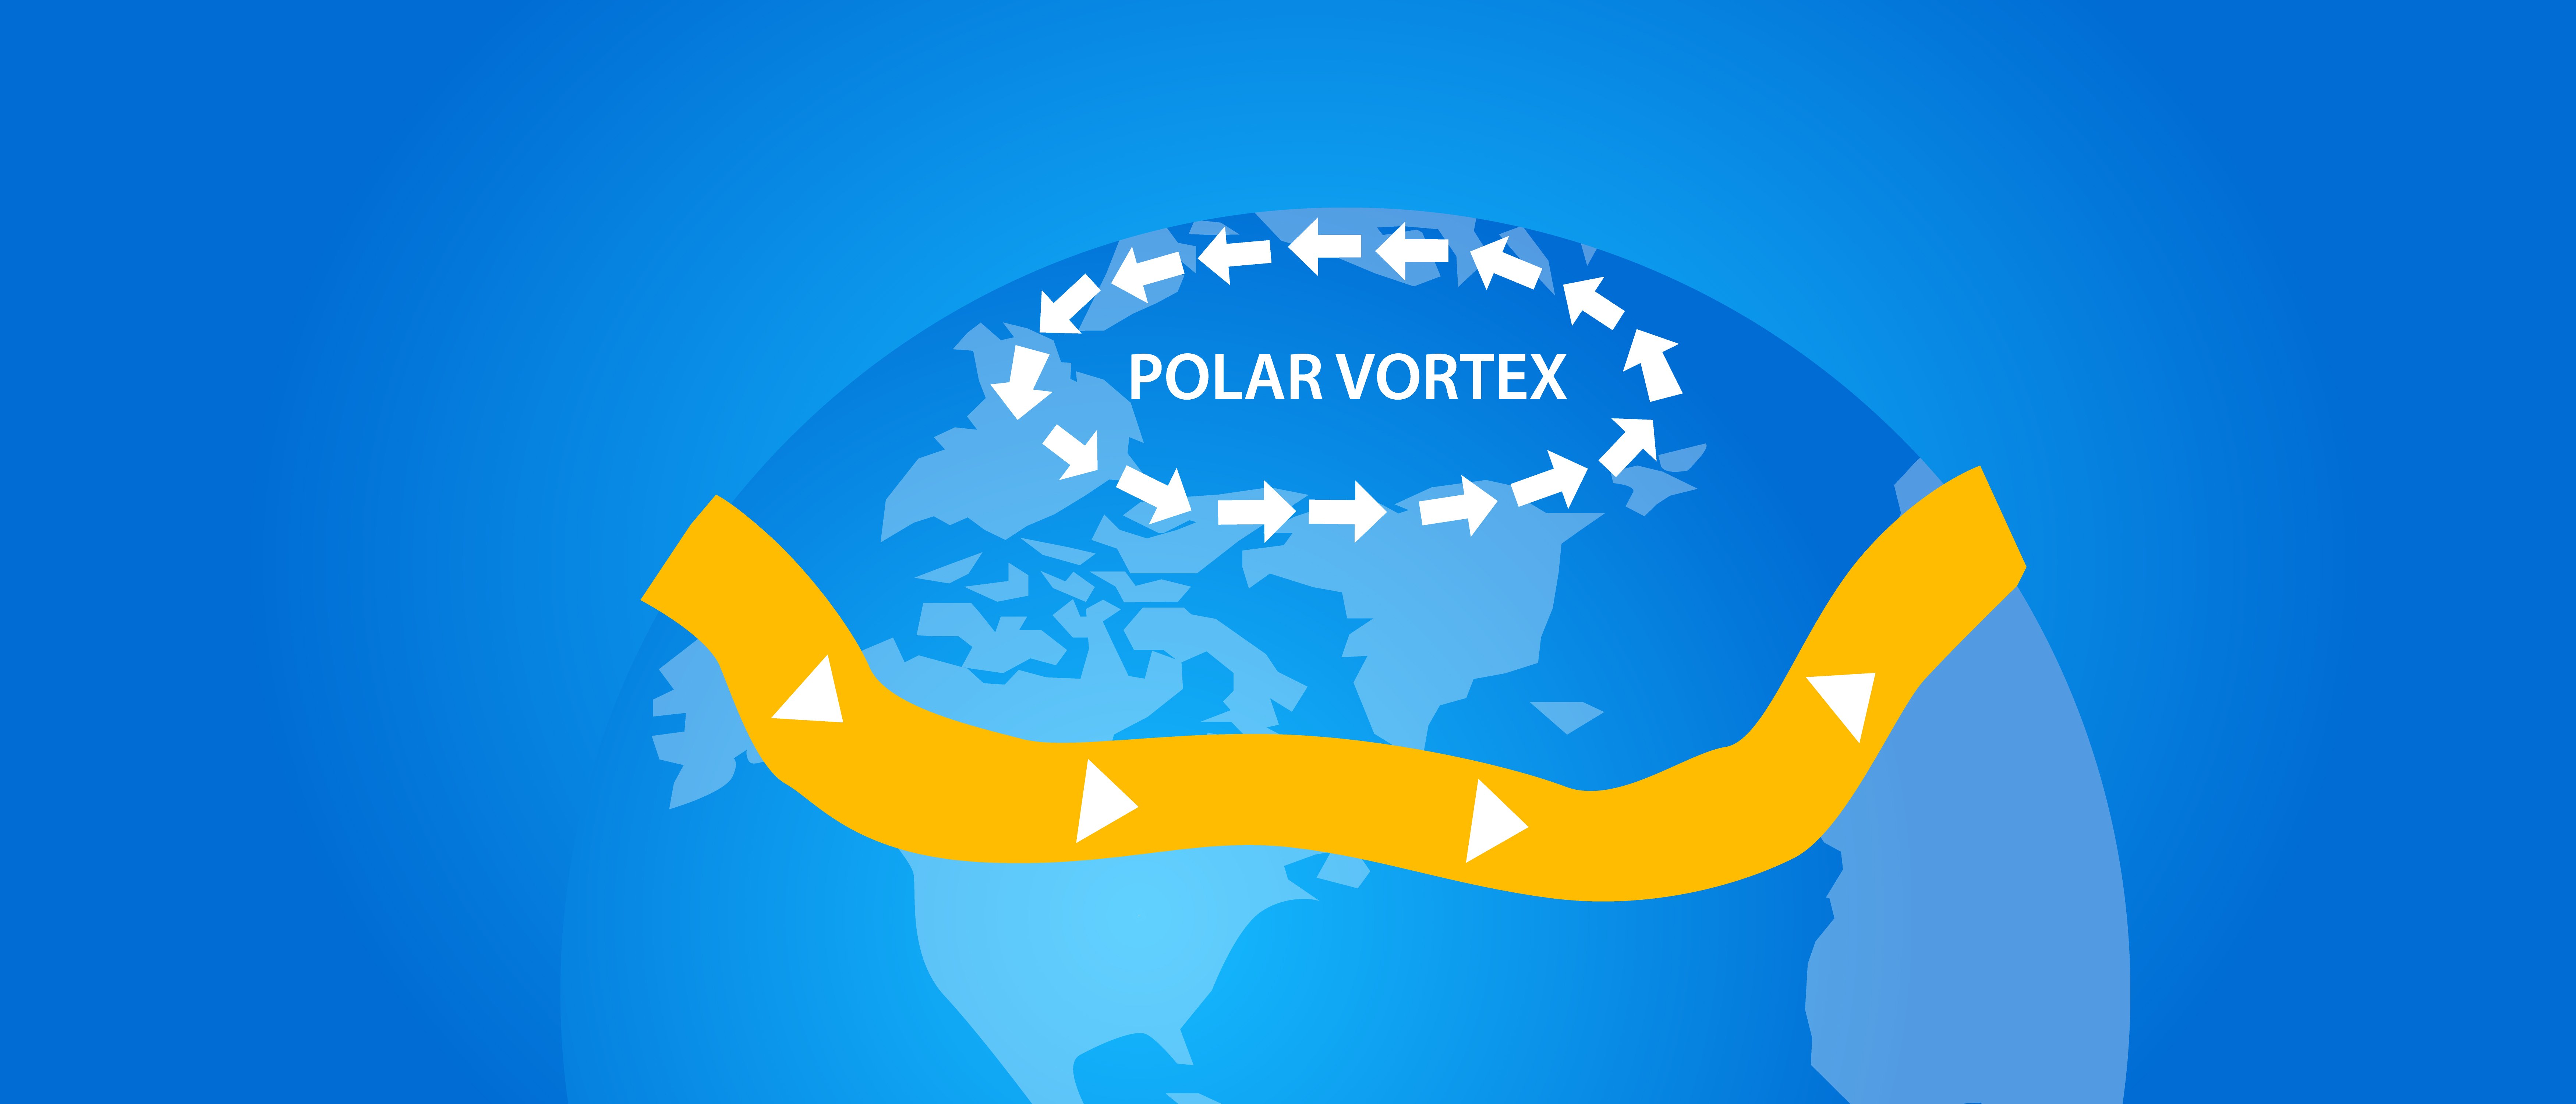 Polar vortex illustration globe wind direction. | Photo: Shutterstock